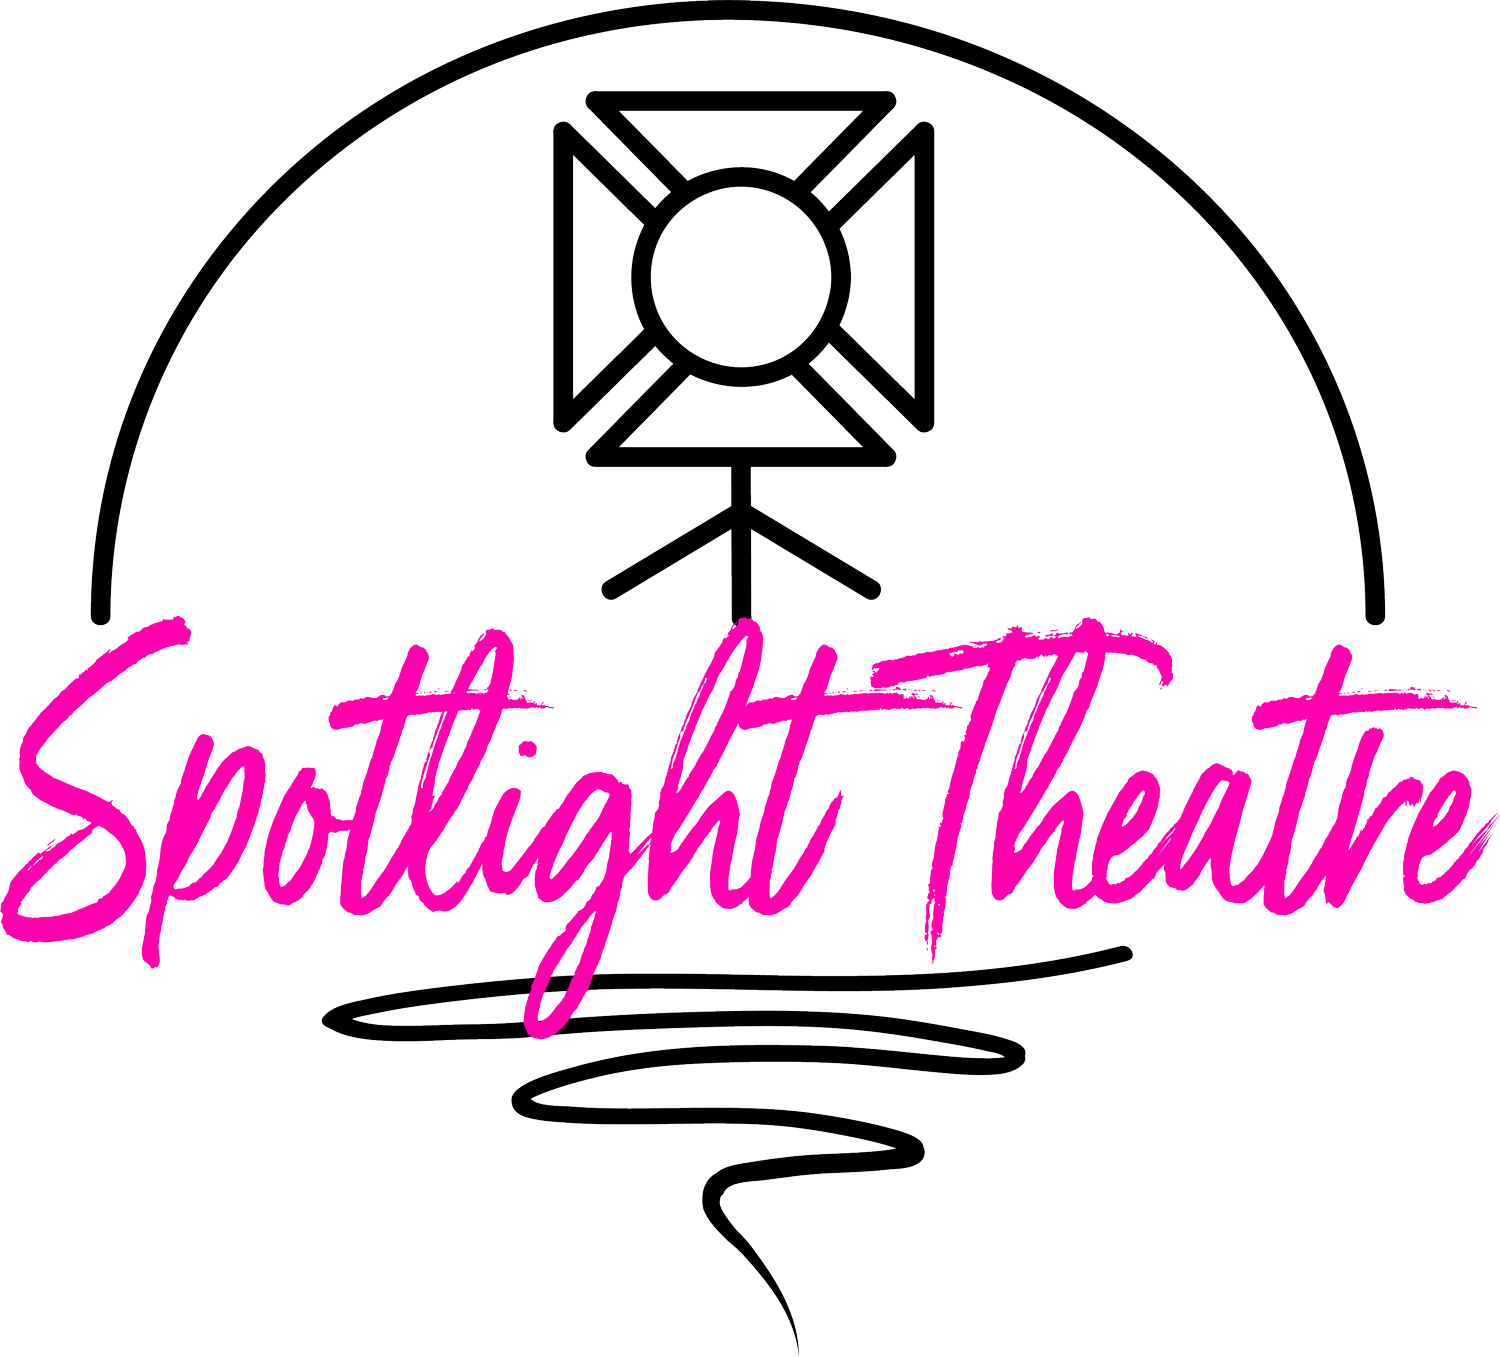 Spotlight Theatre